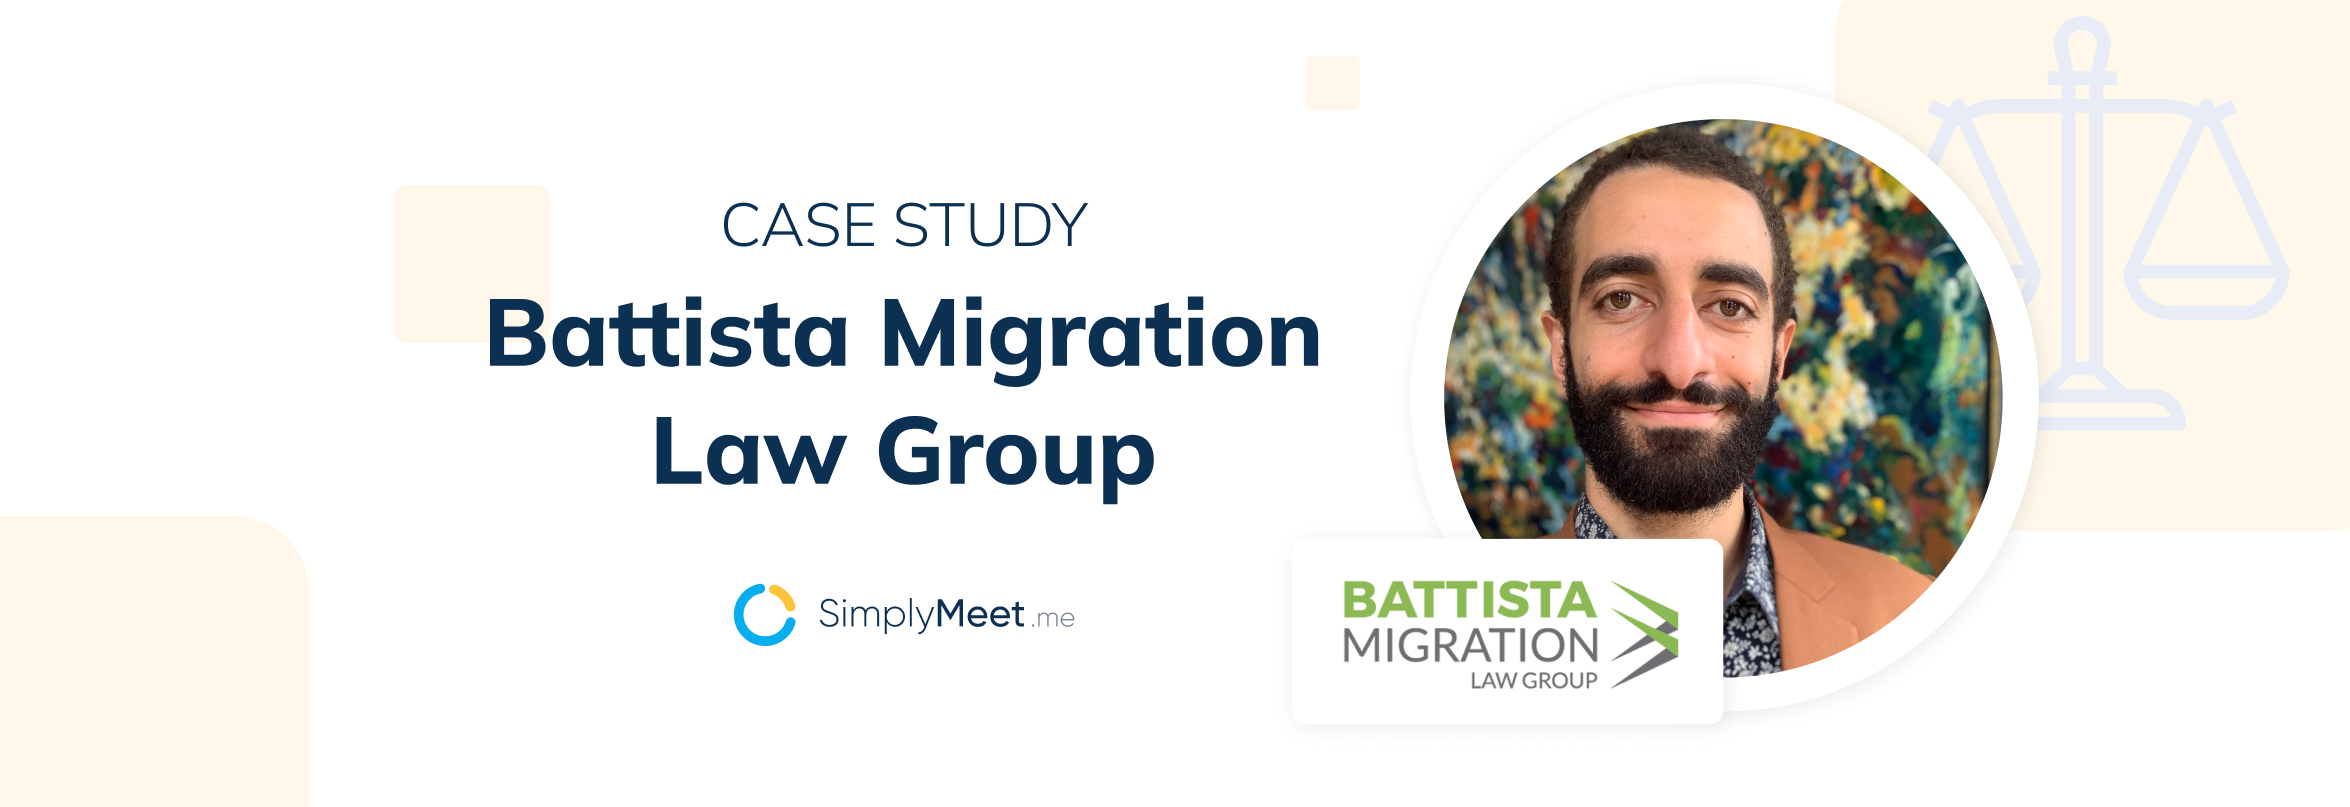 Kareem Ibrahim @ Battista Migration Law Group - Case Study